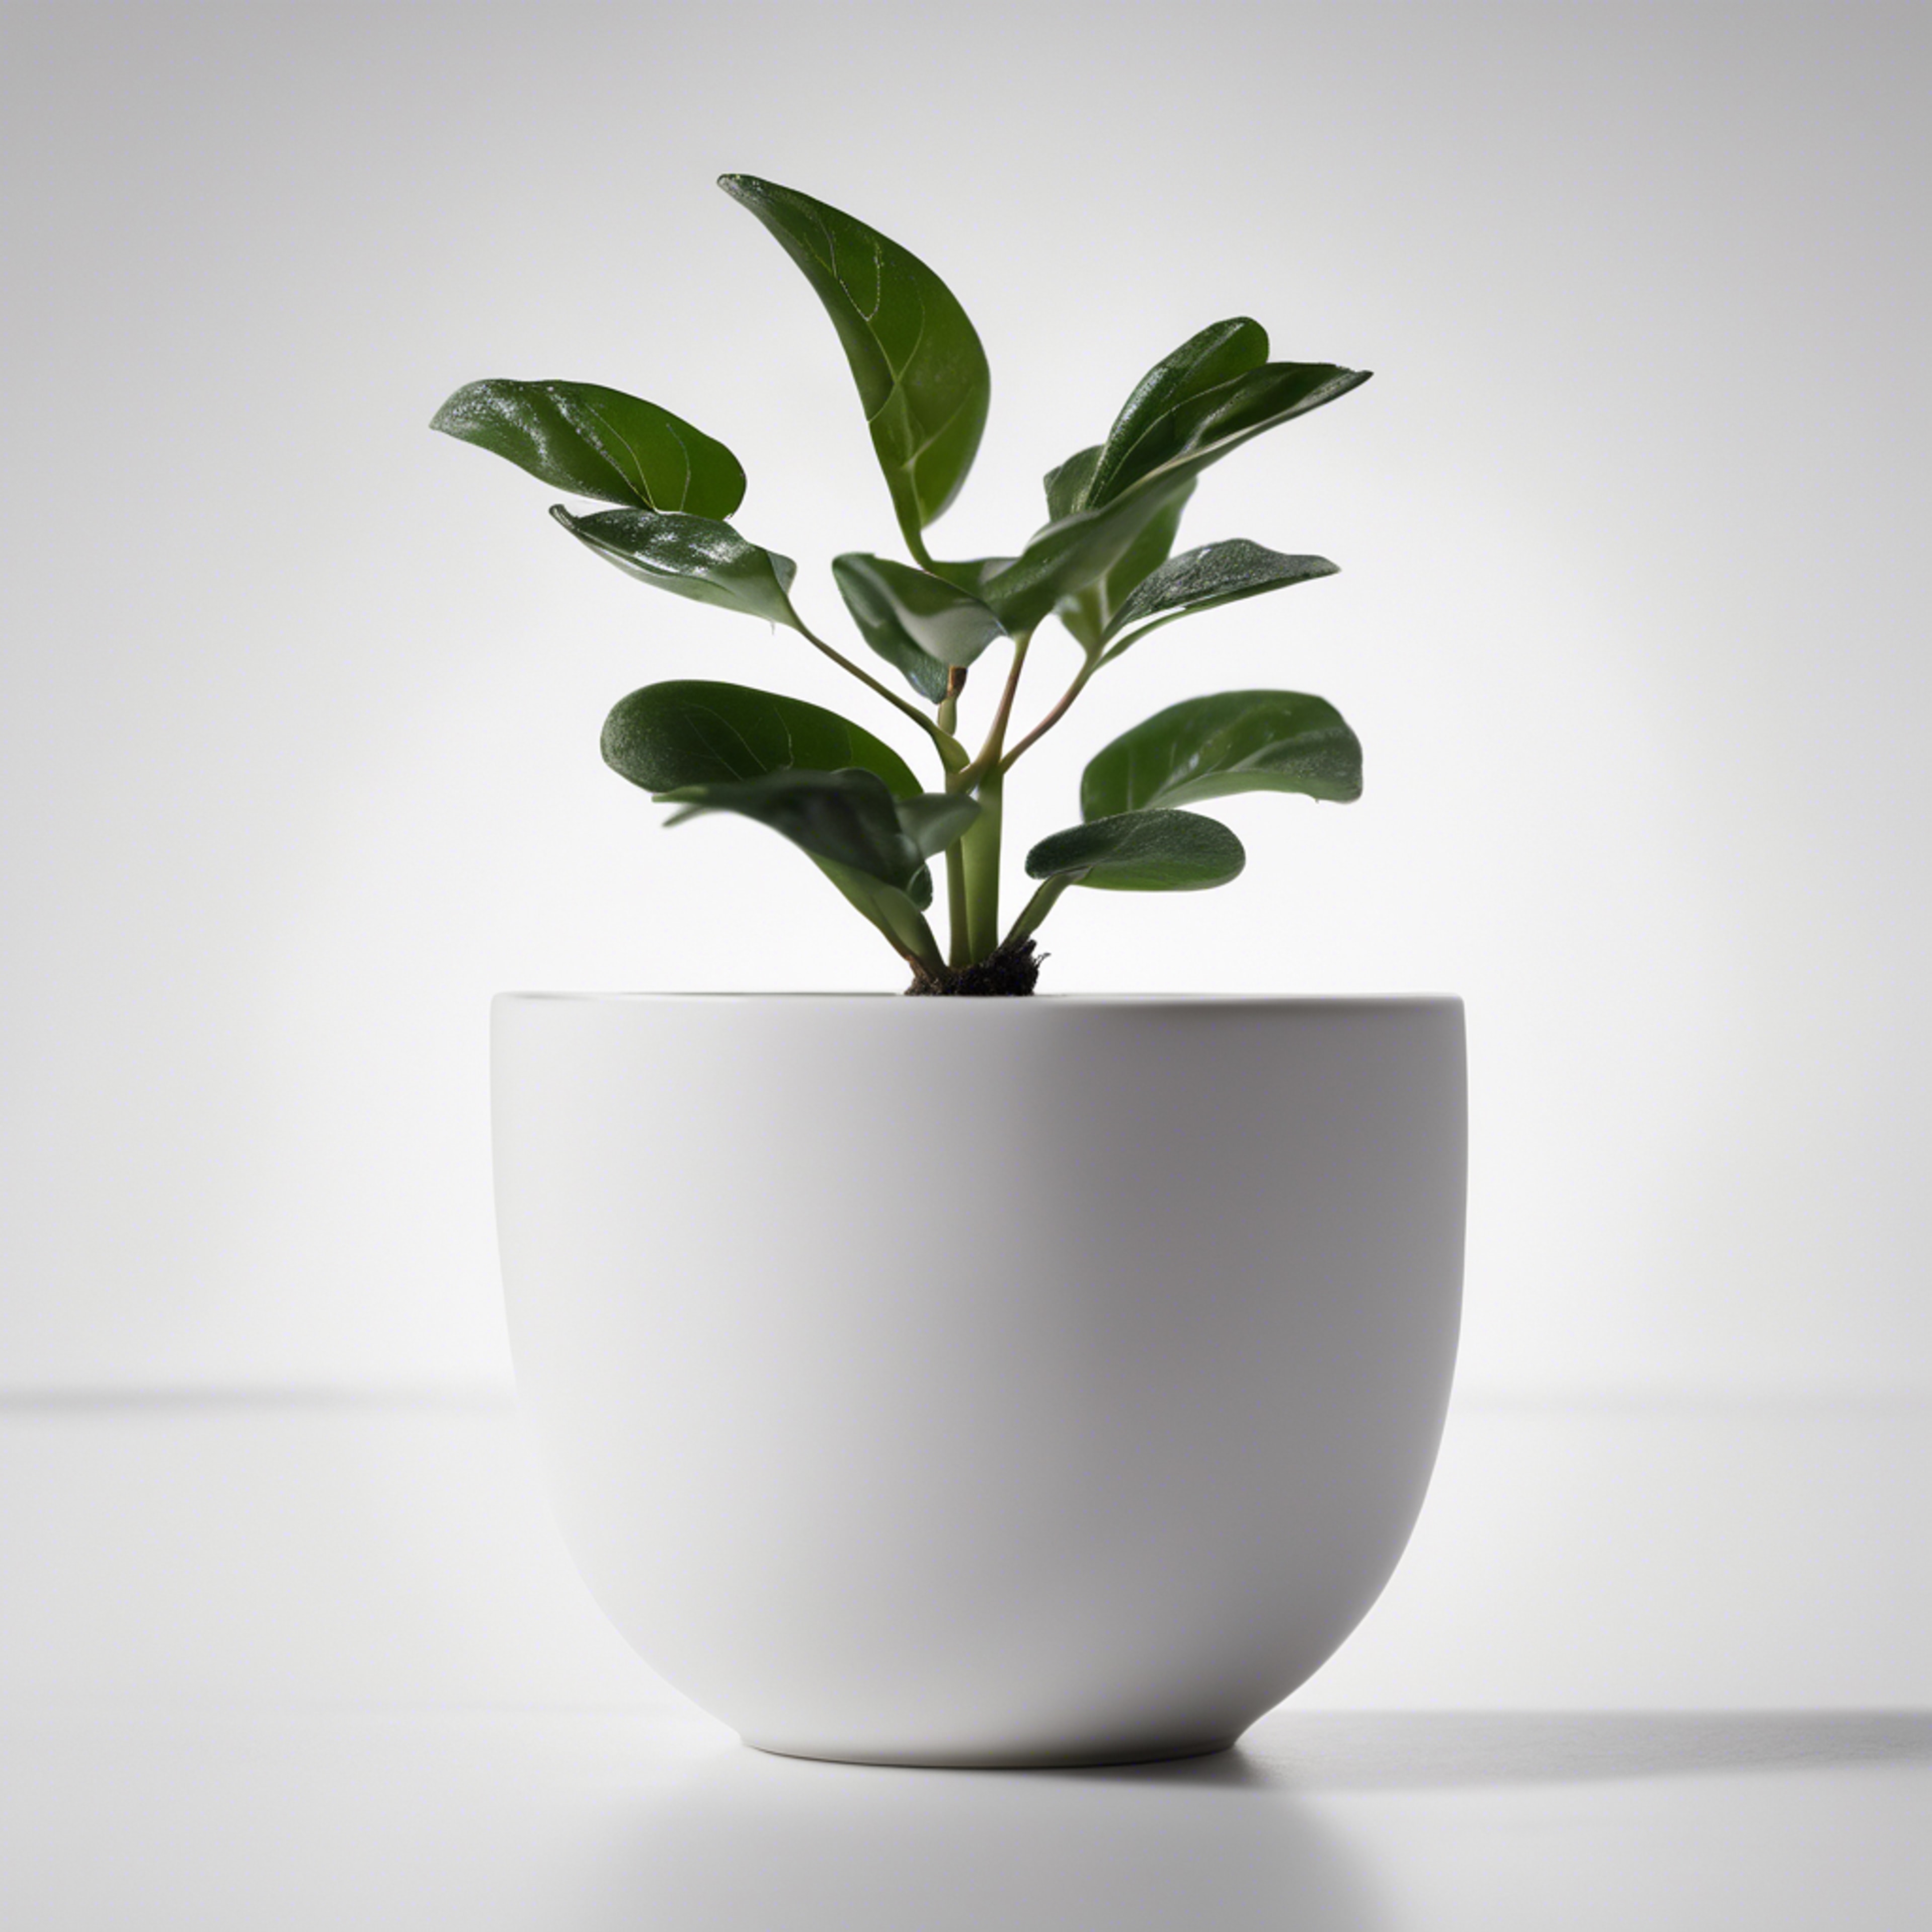 Small plant in a simple white ceramic pot against a minimalist white backdrop. Fond d'écran[a9b2ed4c340742d2b1fd]